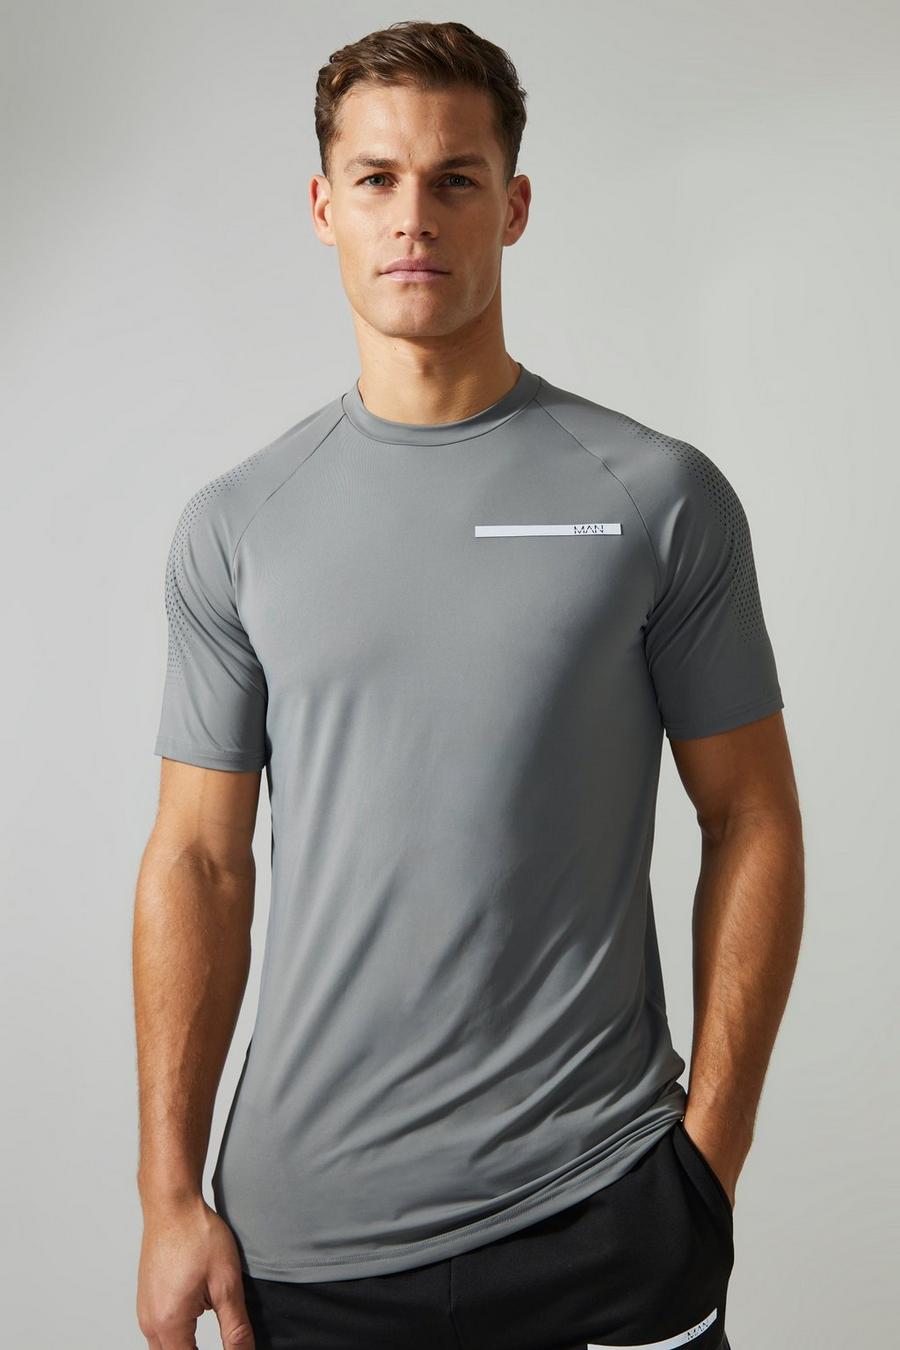 Charcoal grigio Tall Man Active Performance Raglan T Shirt